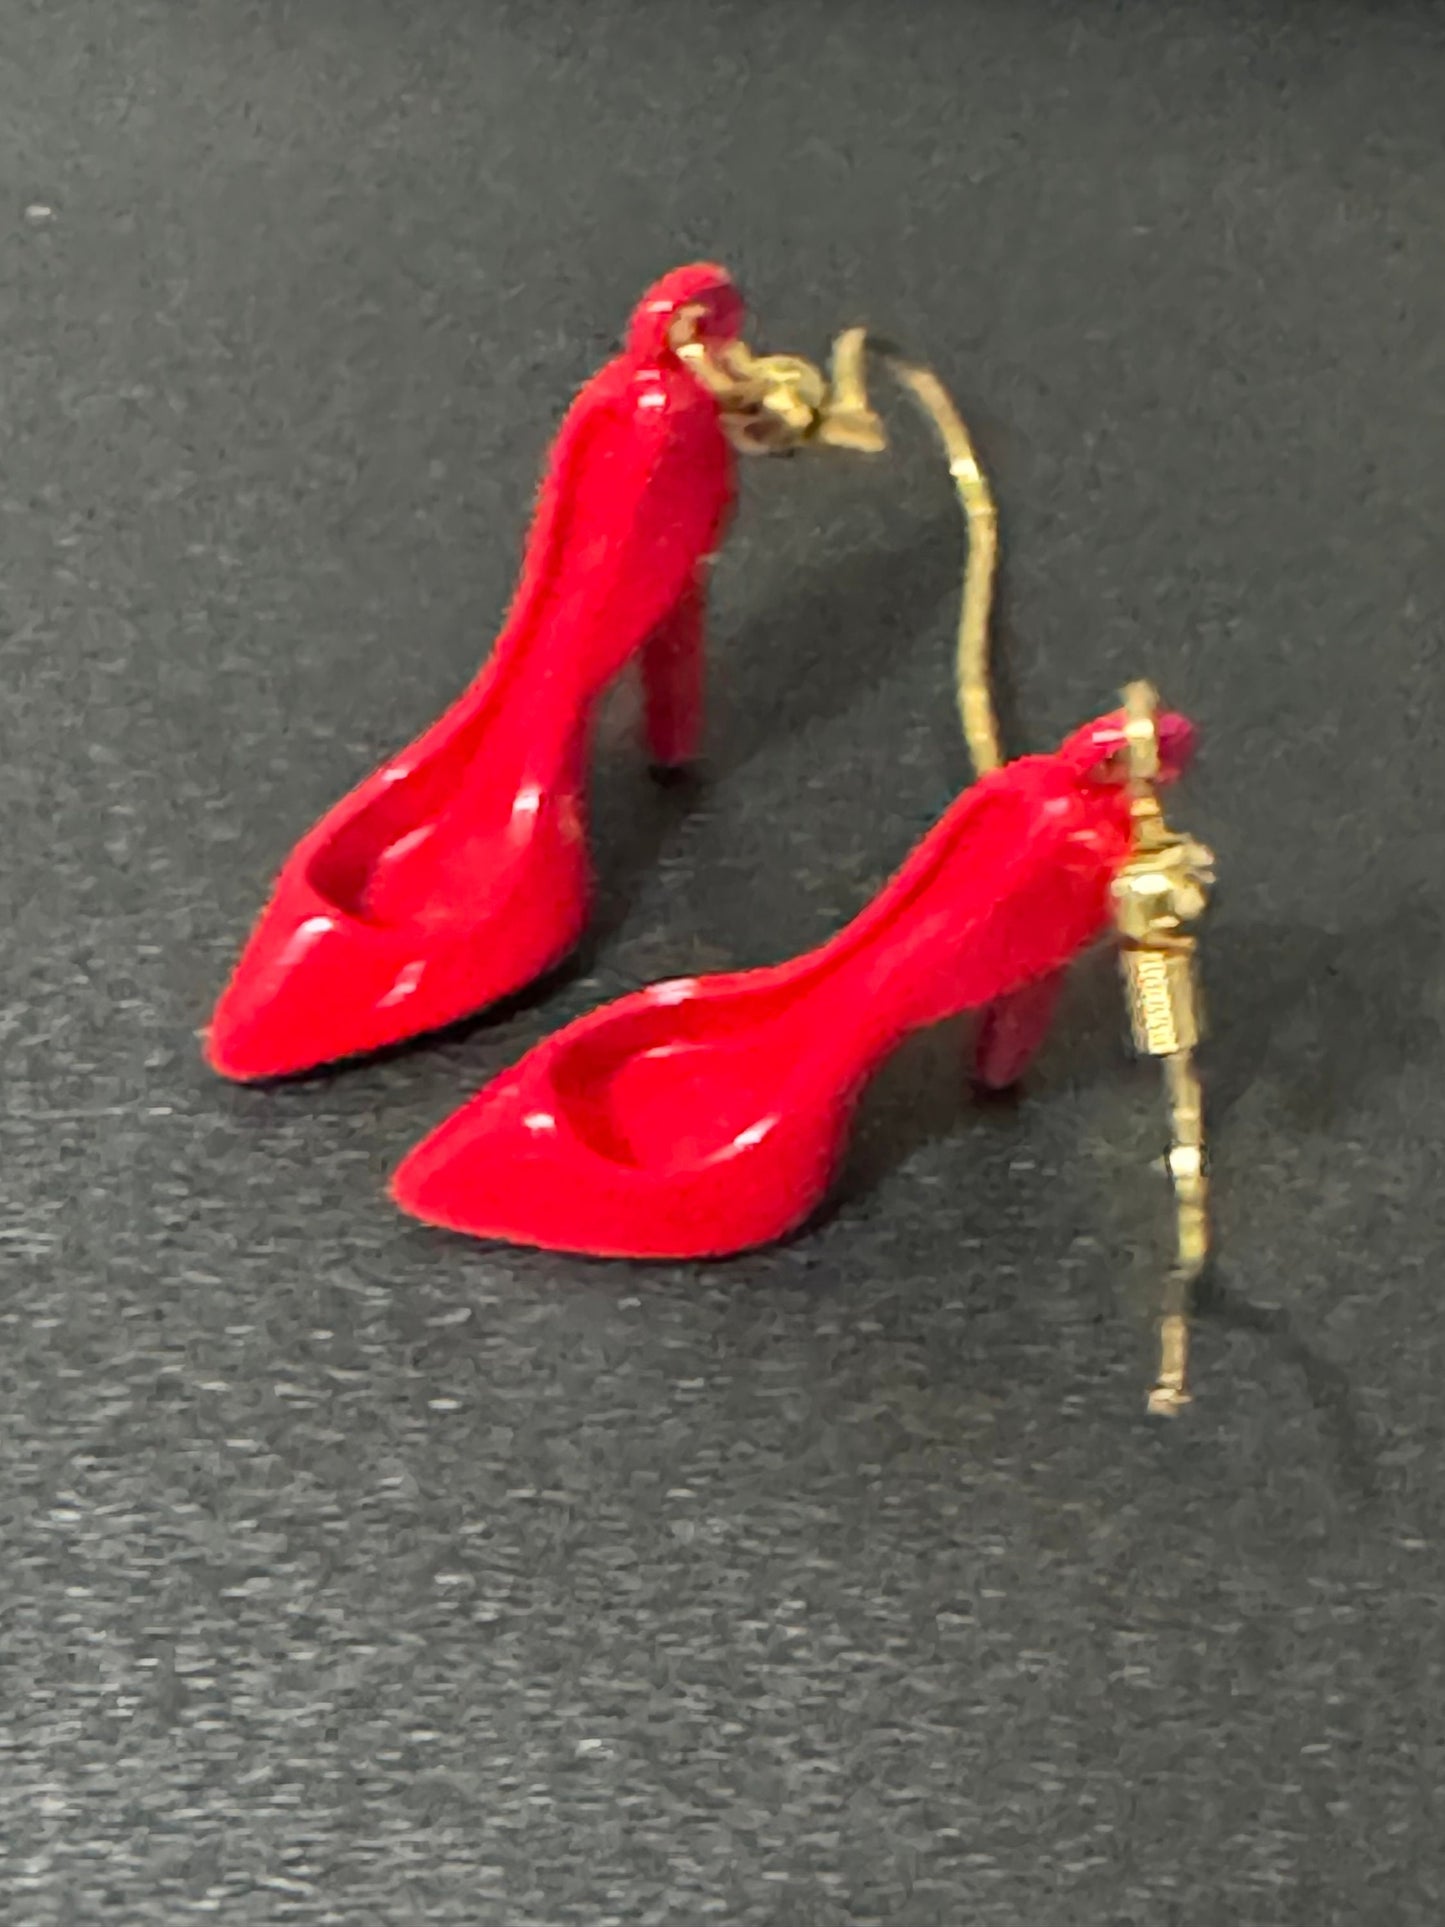 Gold tone bright lipstick red metal stiletto high heeled shoe drop earrings for pierced ears